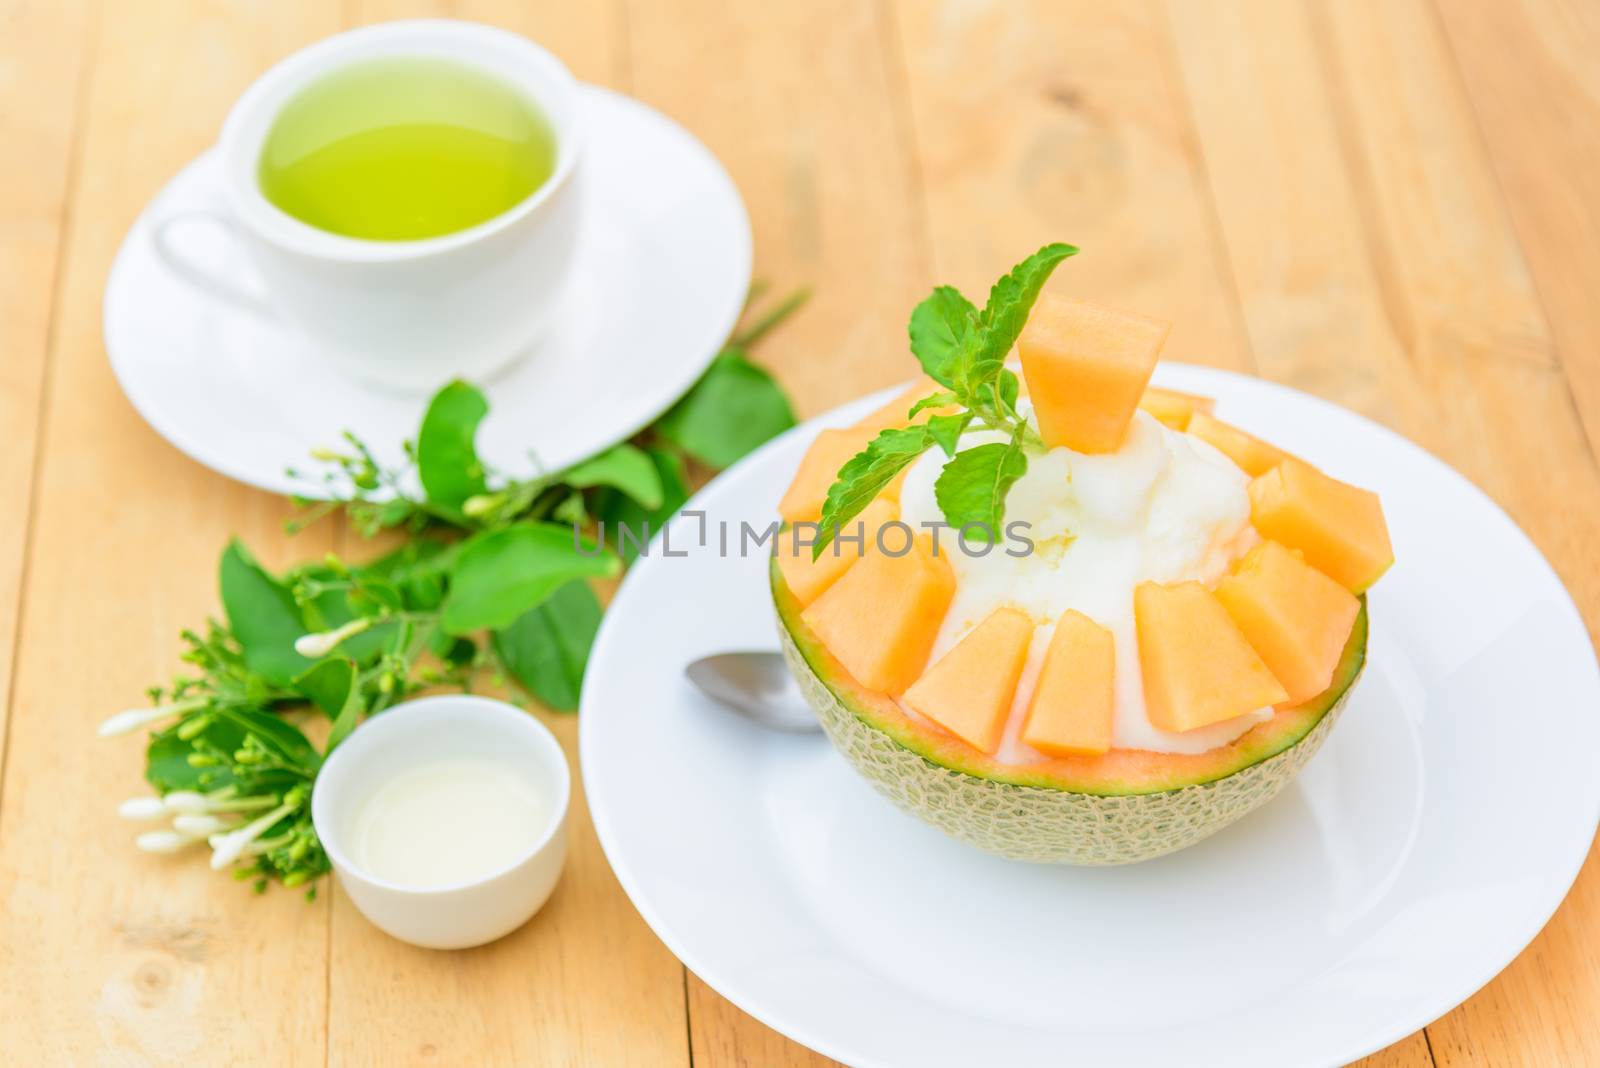 Melon Bingsu with Sweetened Condensed Milk on wood table